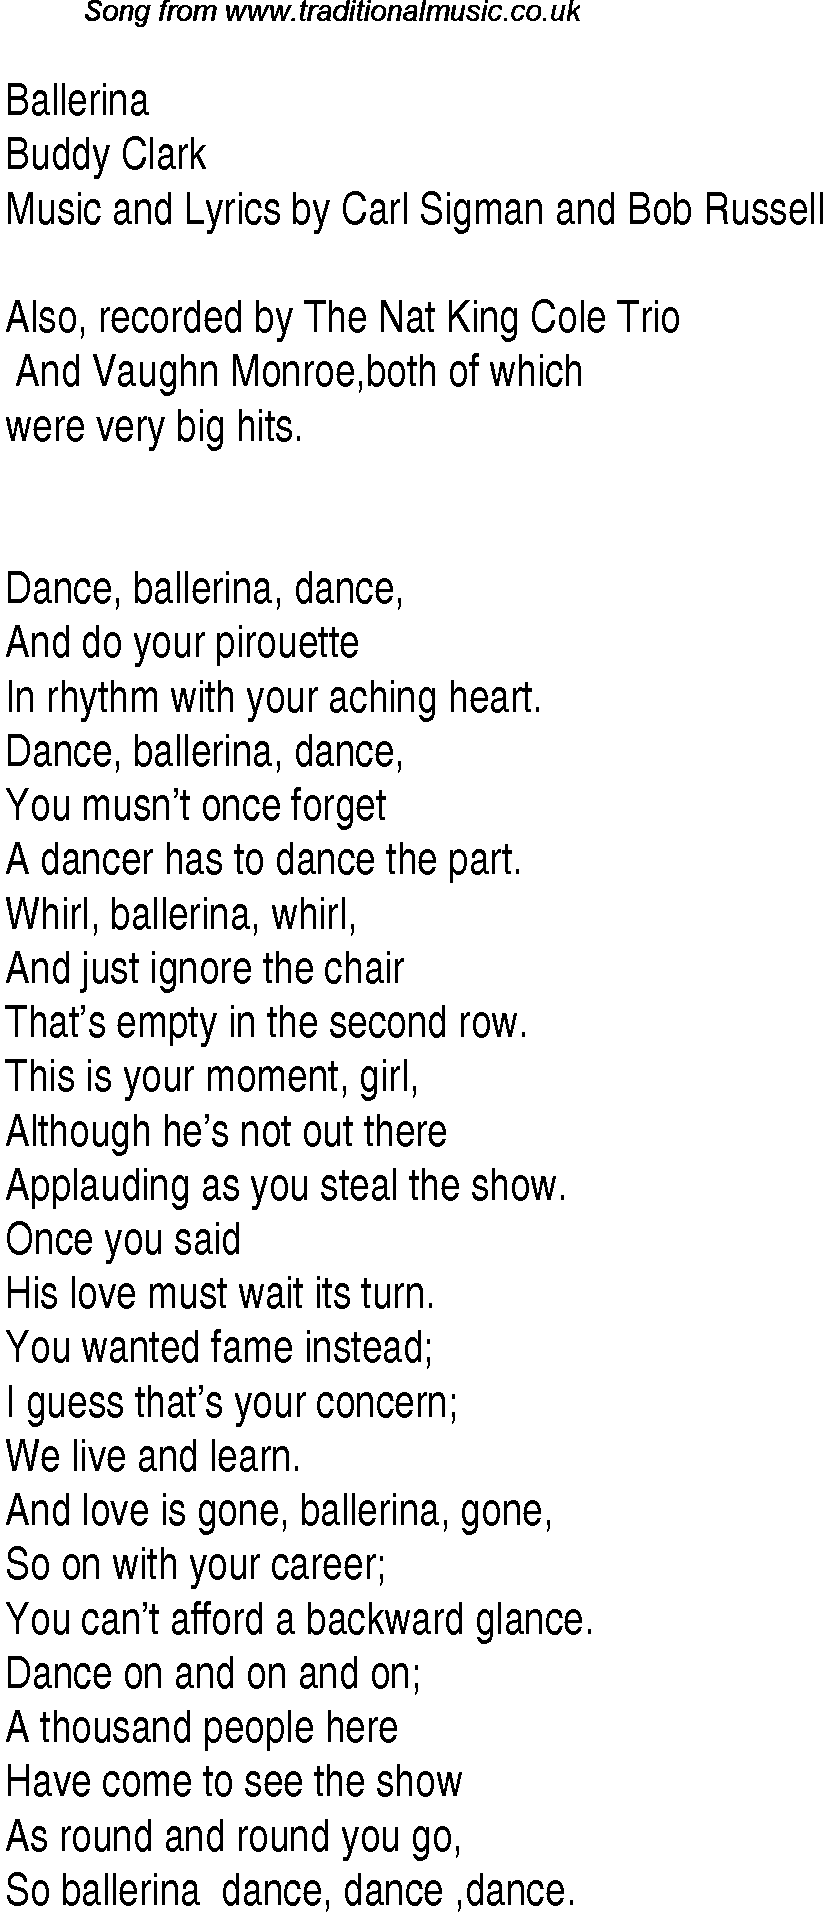 Music charts top songs 1949 - lyrics for Ballerinabc